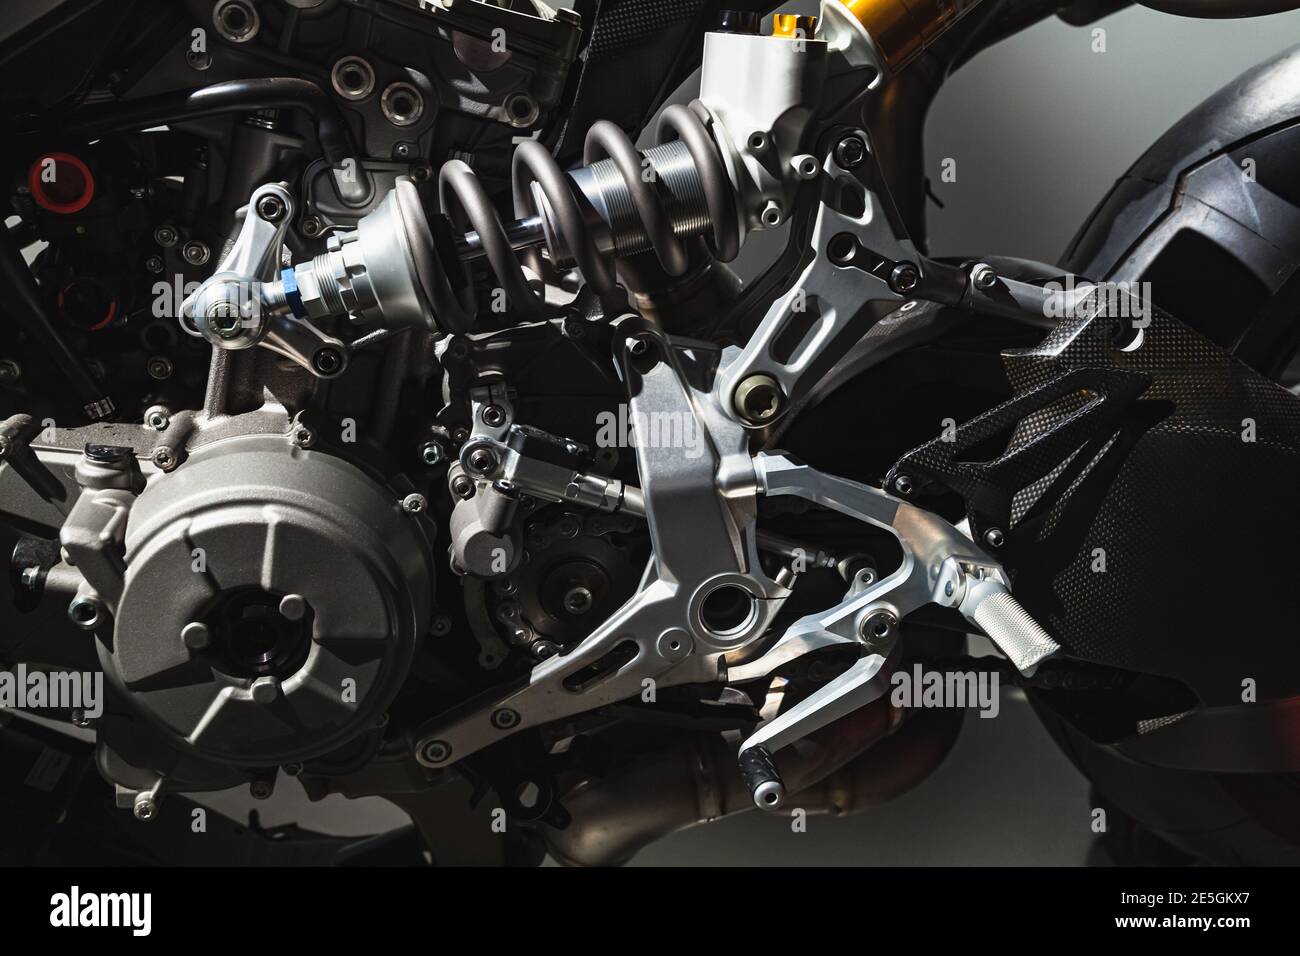 Black speed bike fragment, engine and transmission details, close up photo Stock Photo